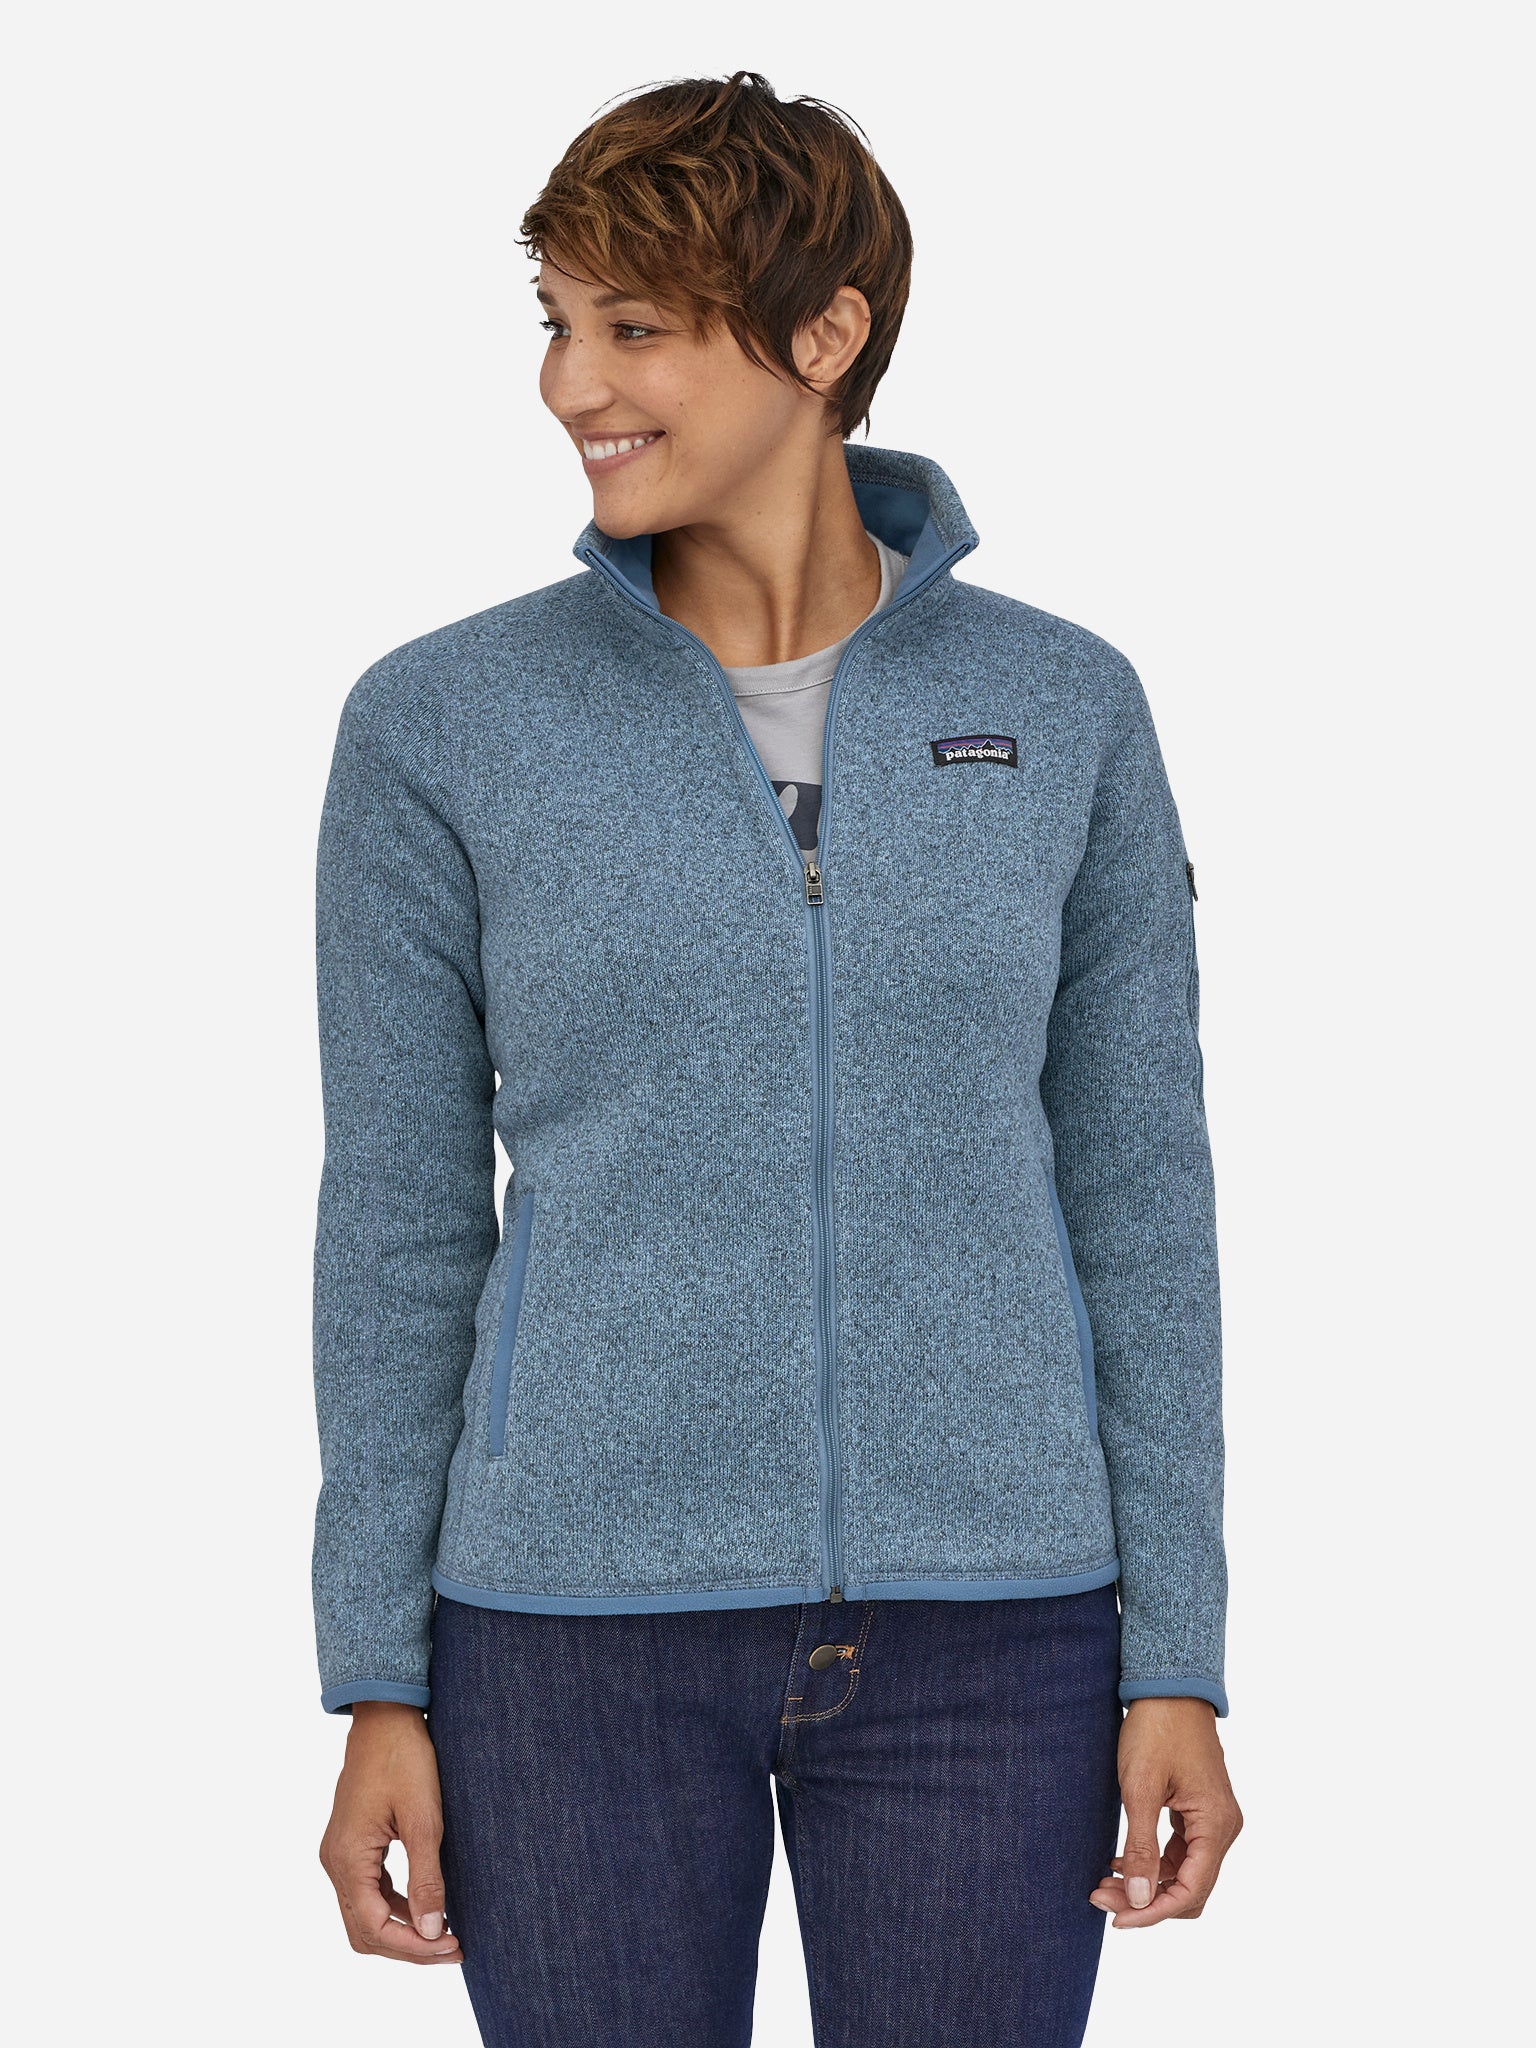 Patagonia Better Sweater Jacket - Black - S - Women